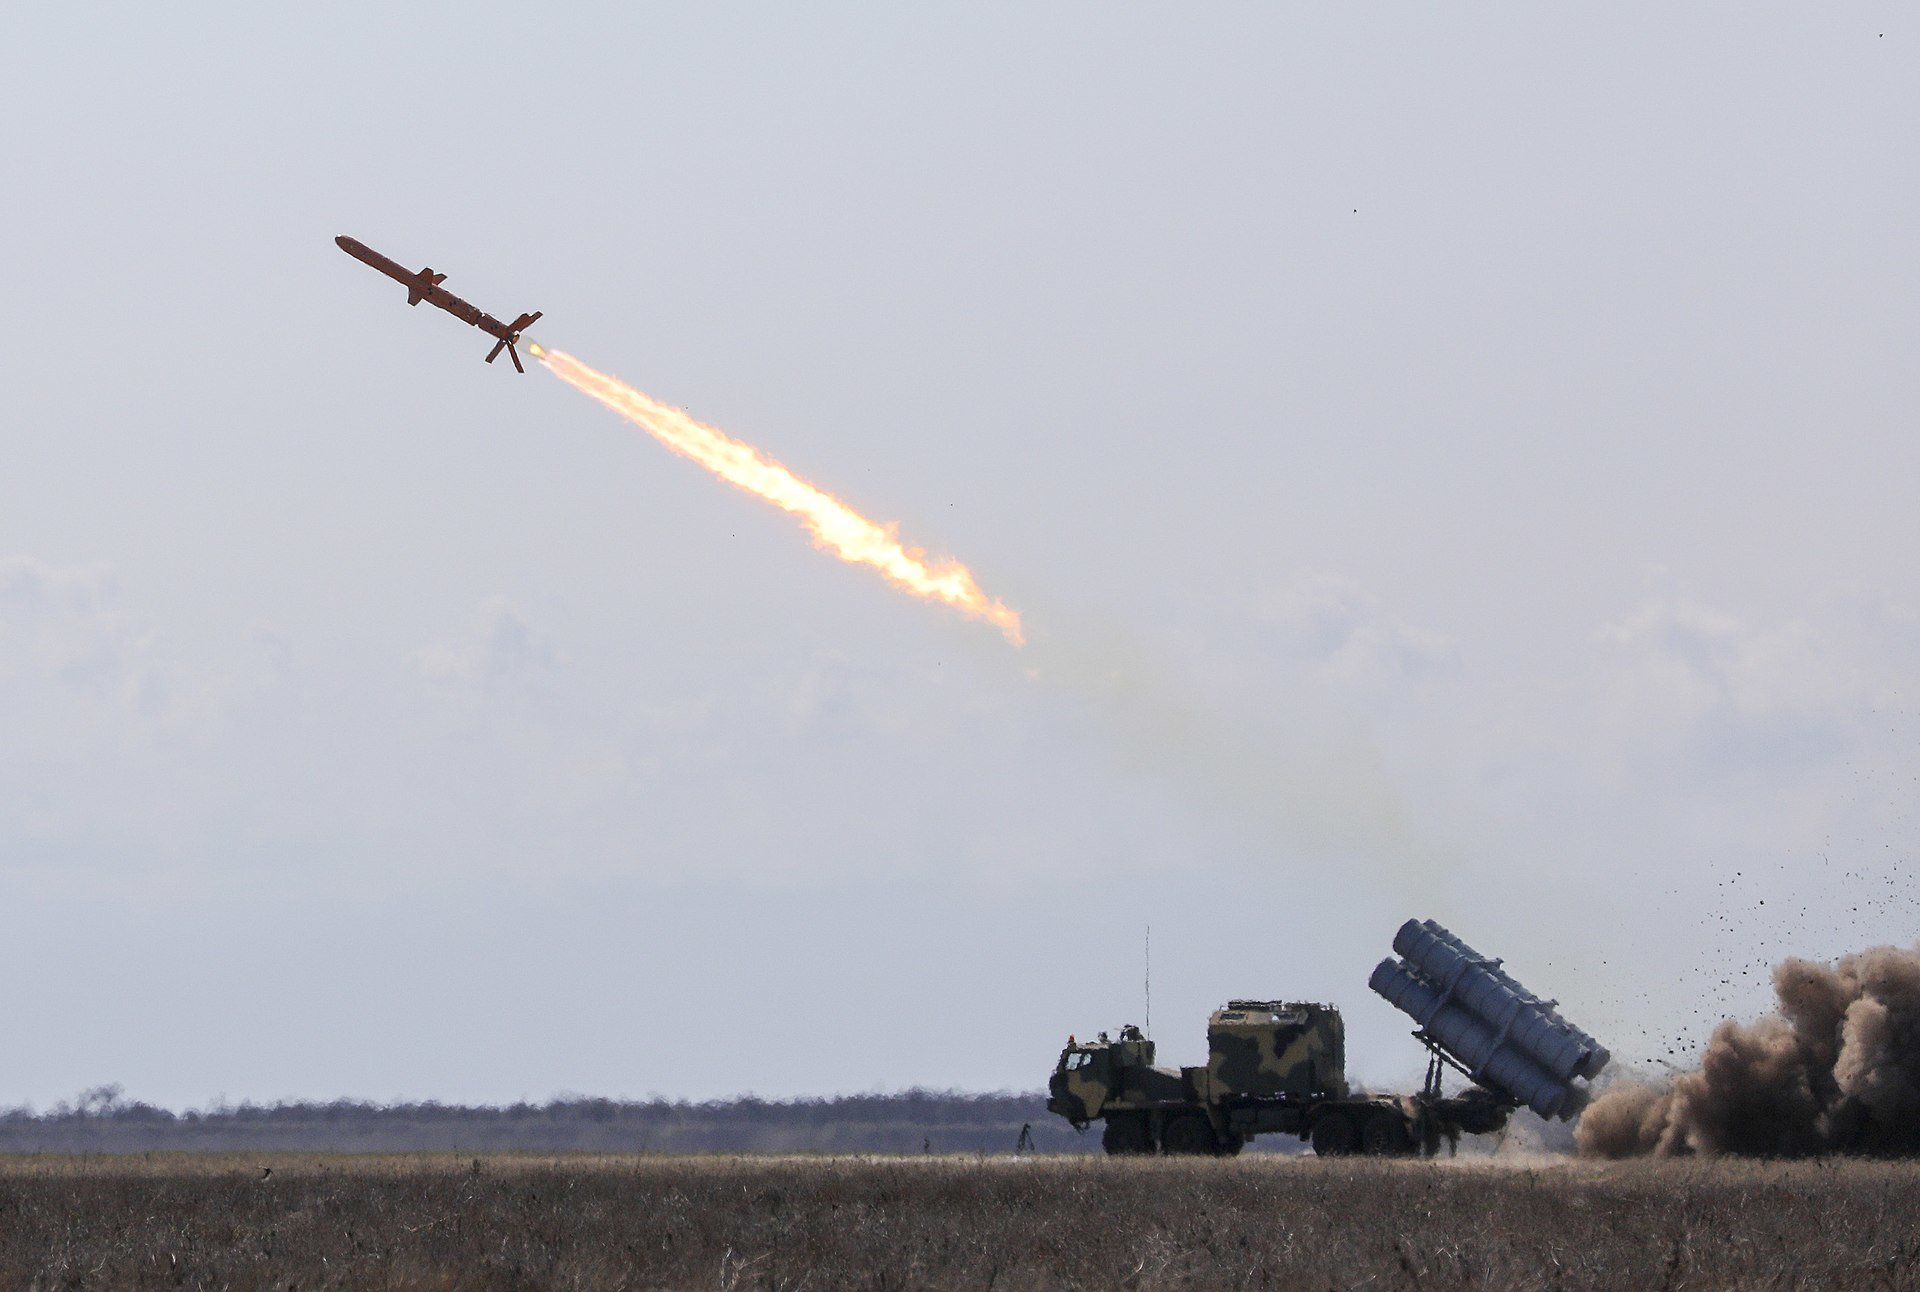 Ukrainian missiles